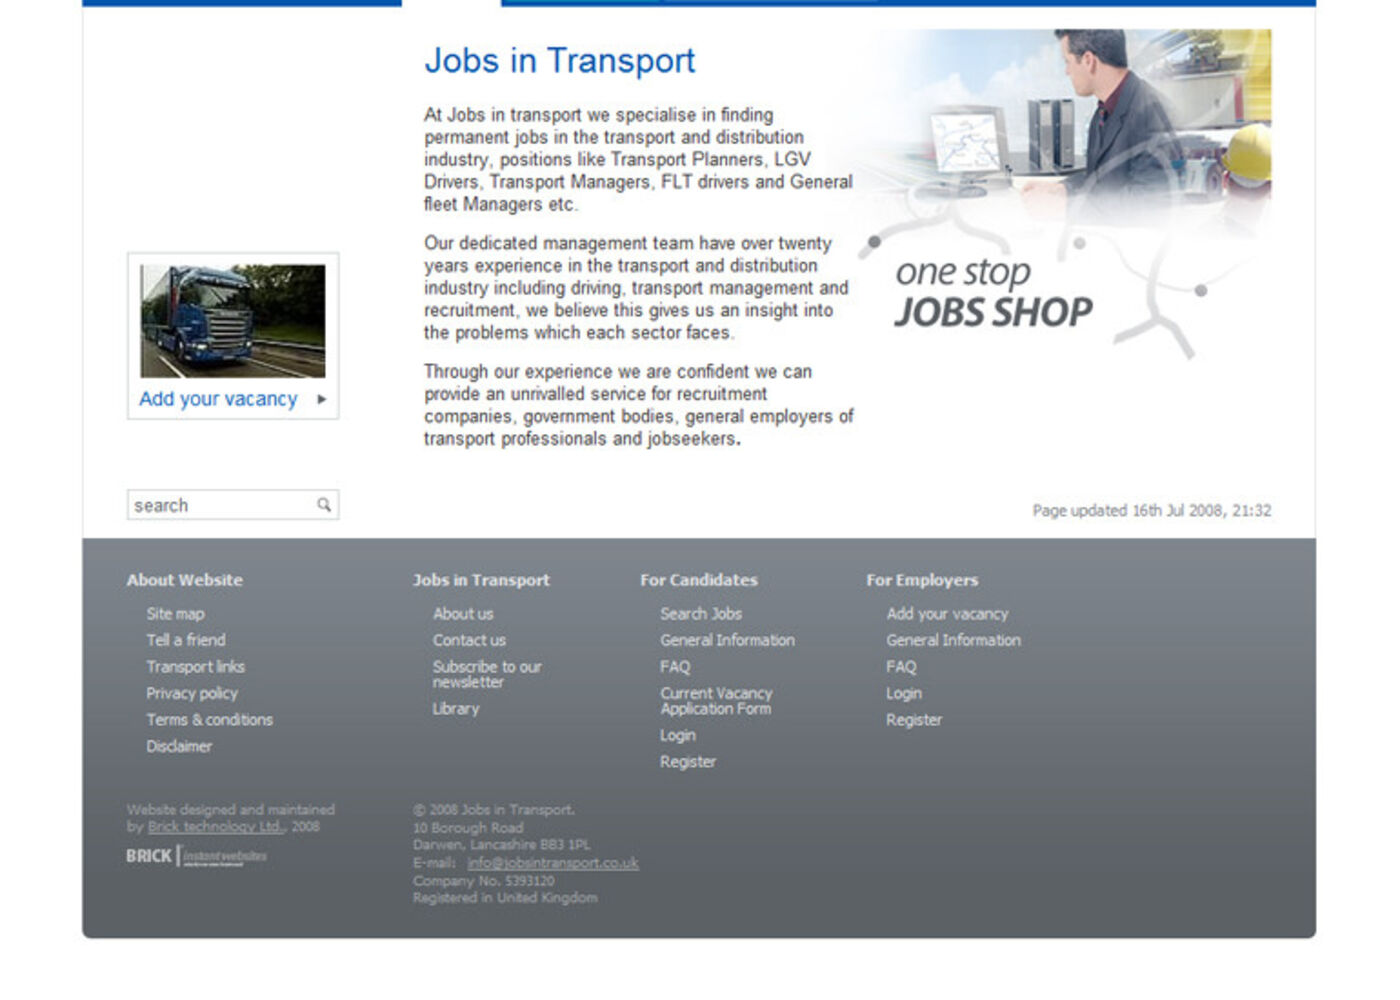 Jobs in Transport Homepage footer